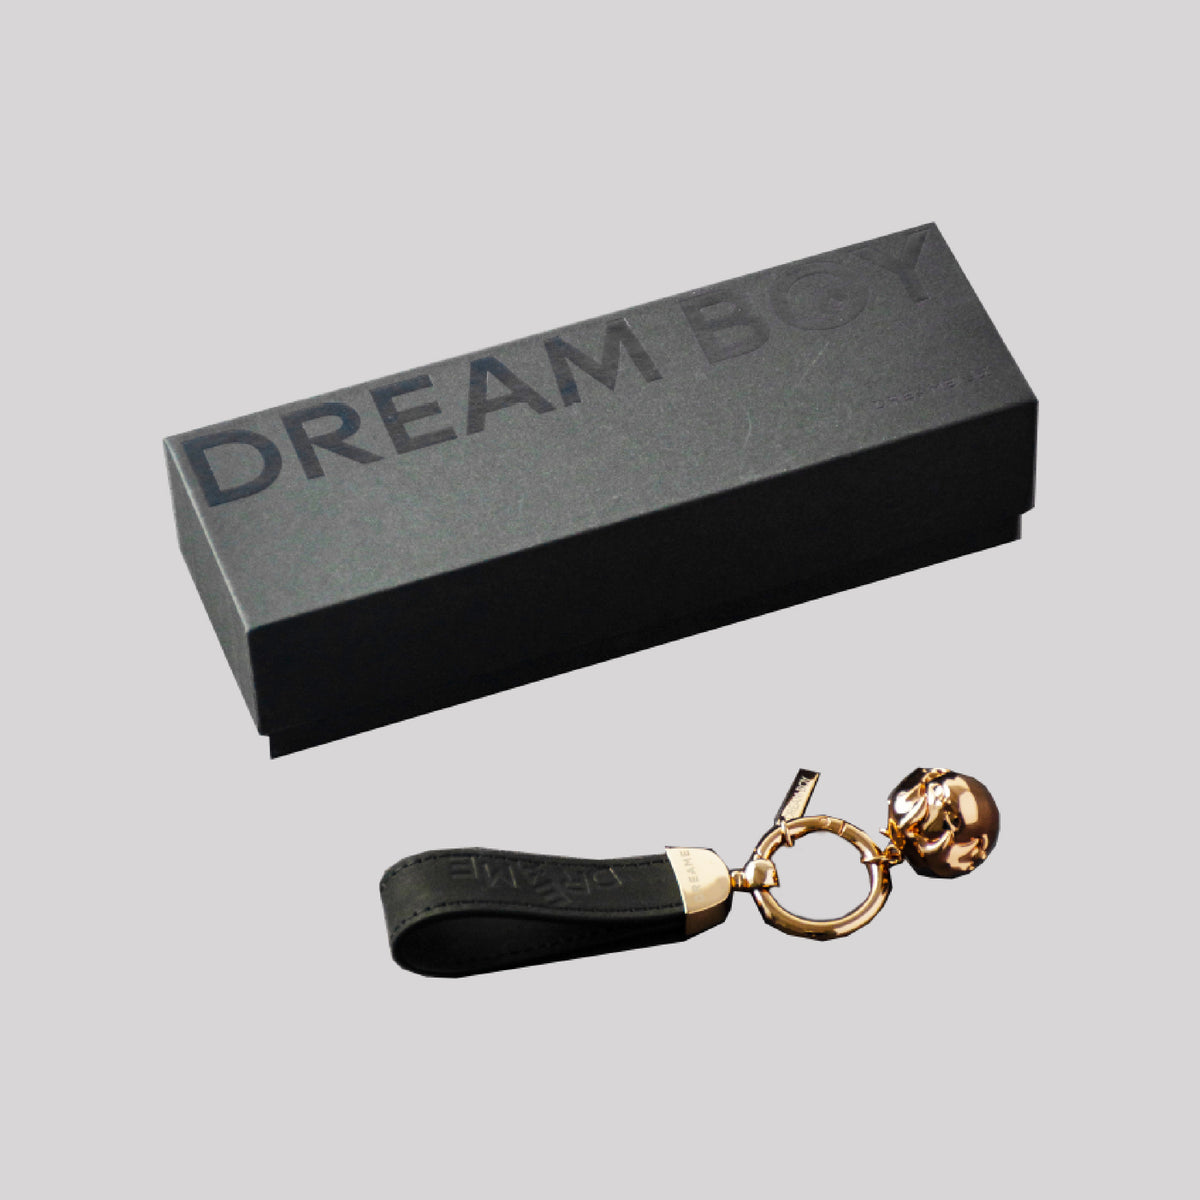 DREAM BOY Collection Series Keychain